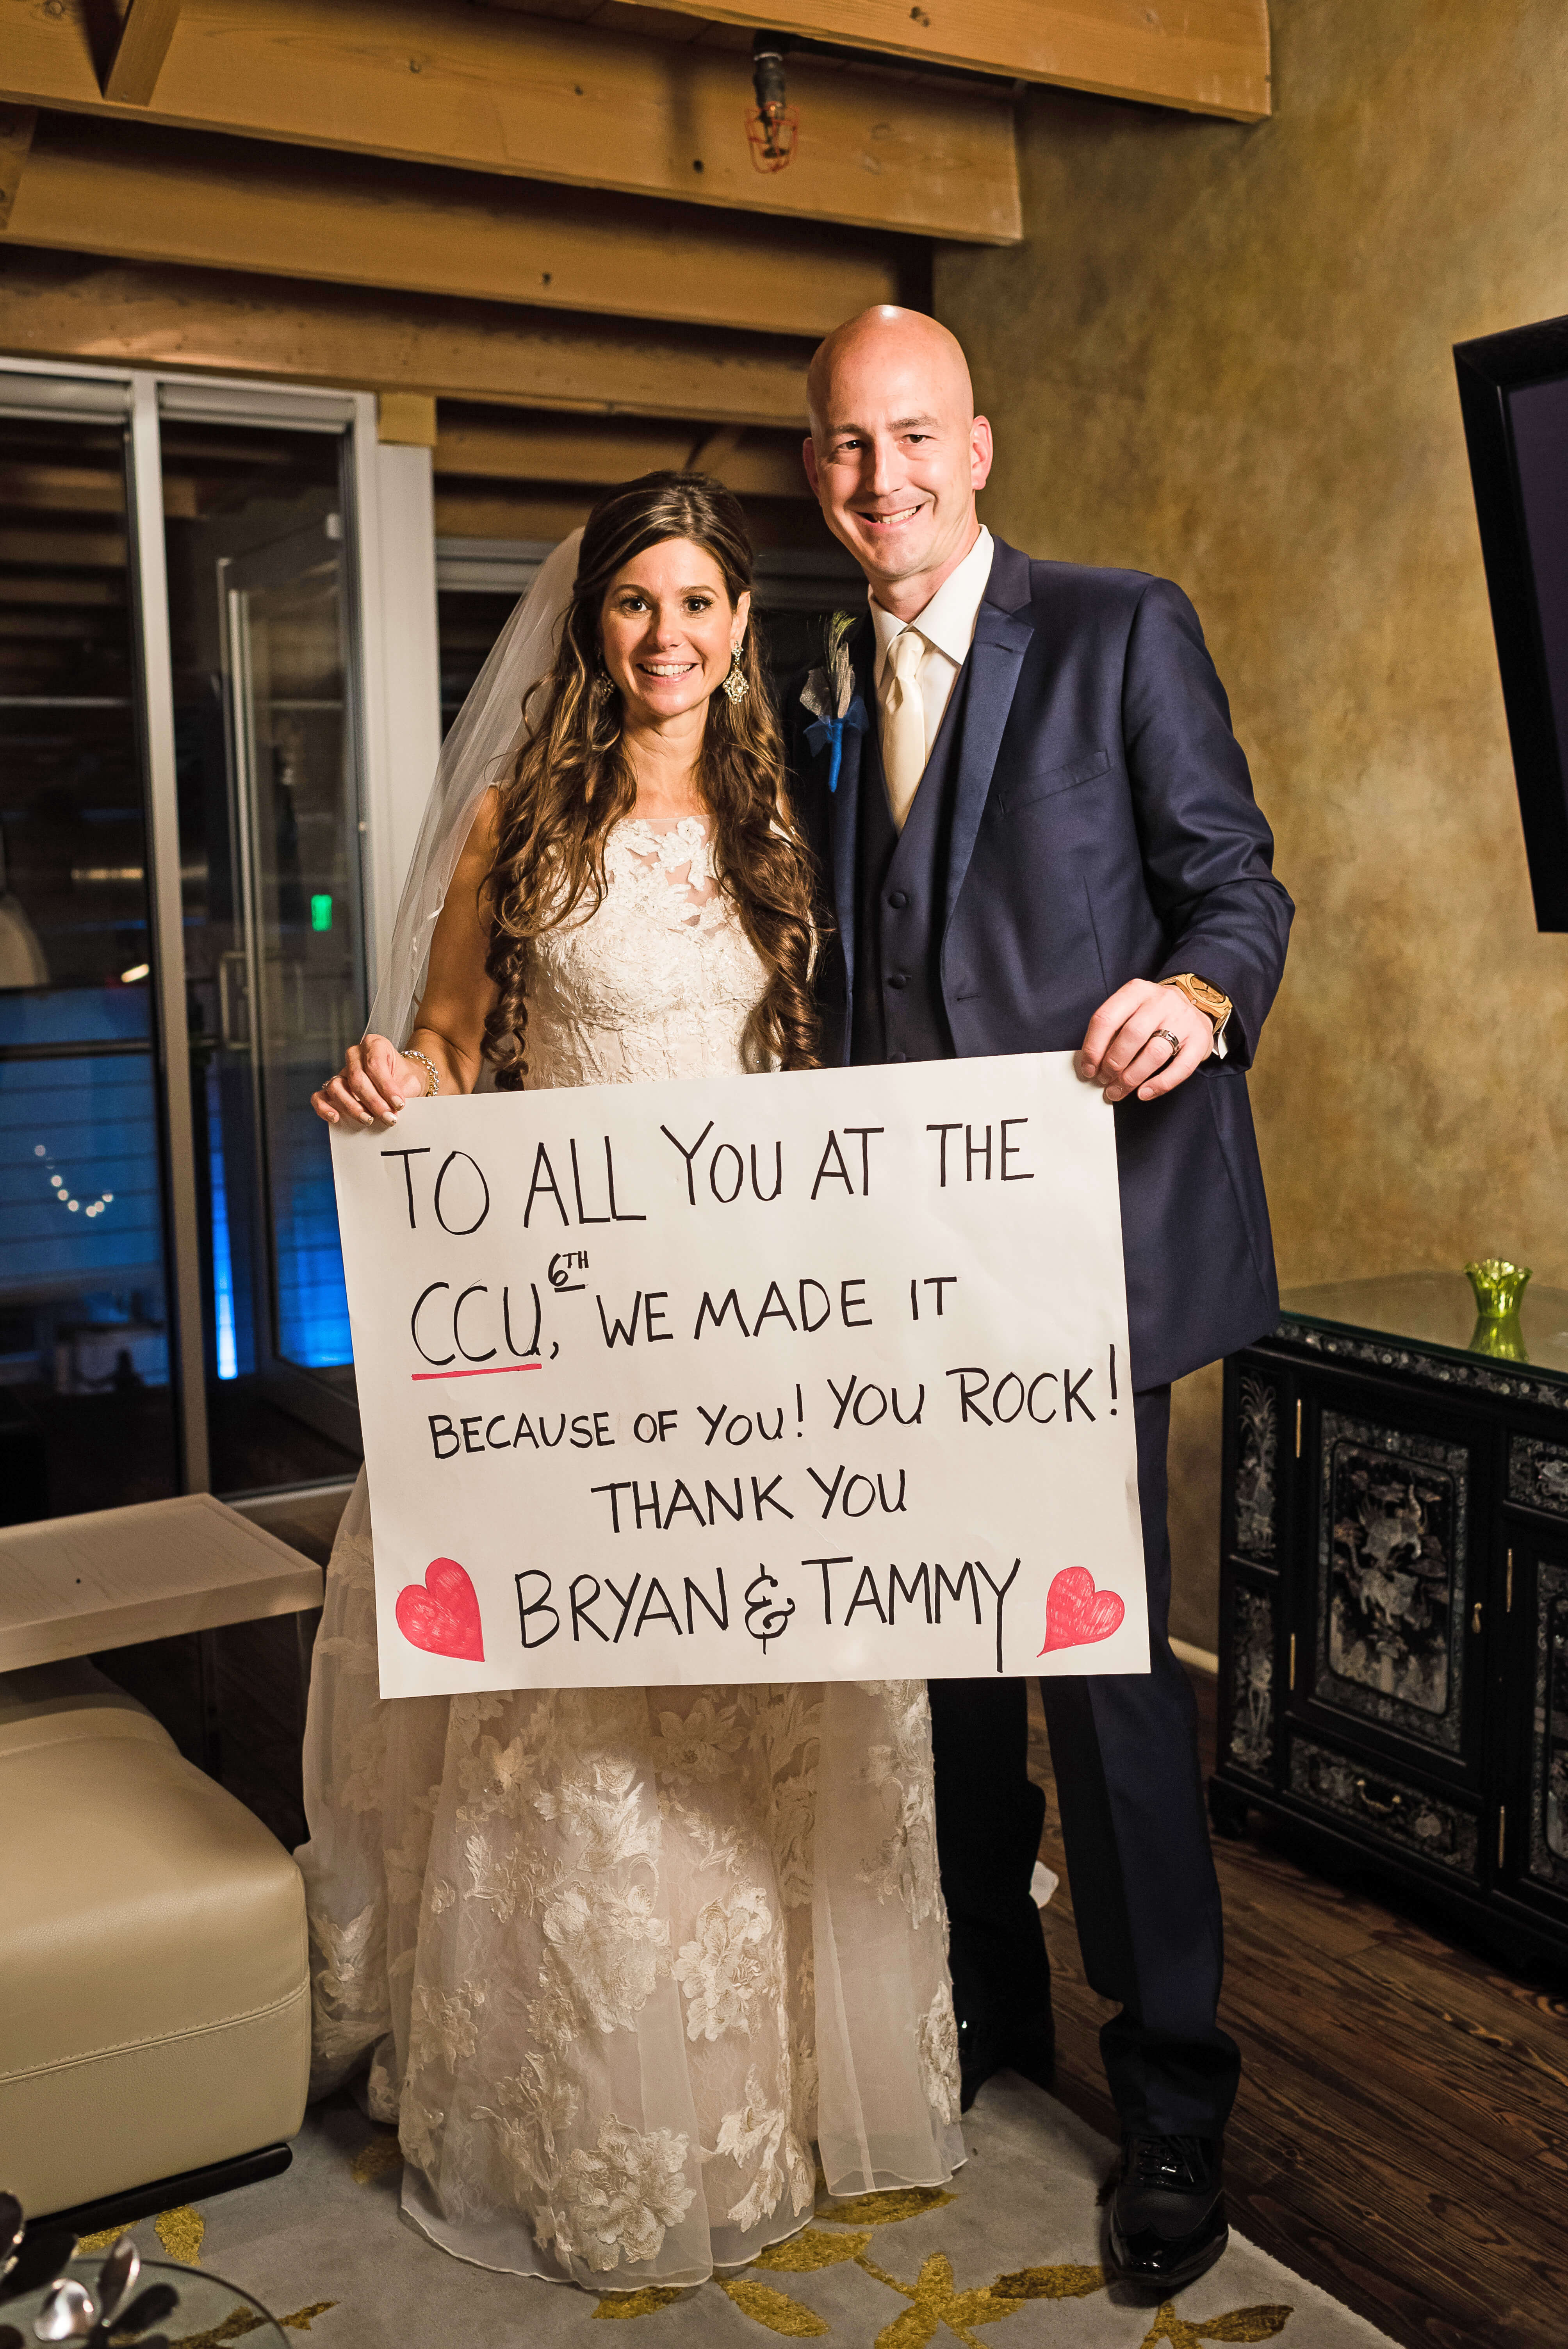 Tammy and Bryan wedding thank you